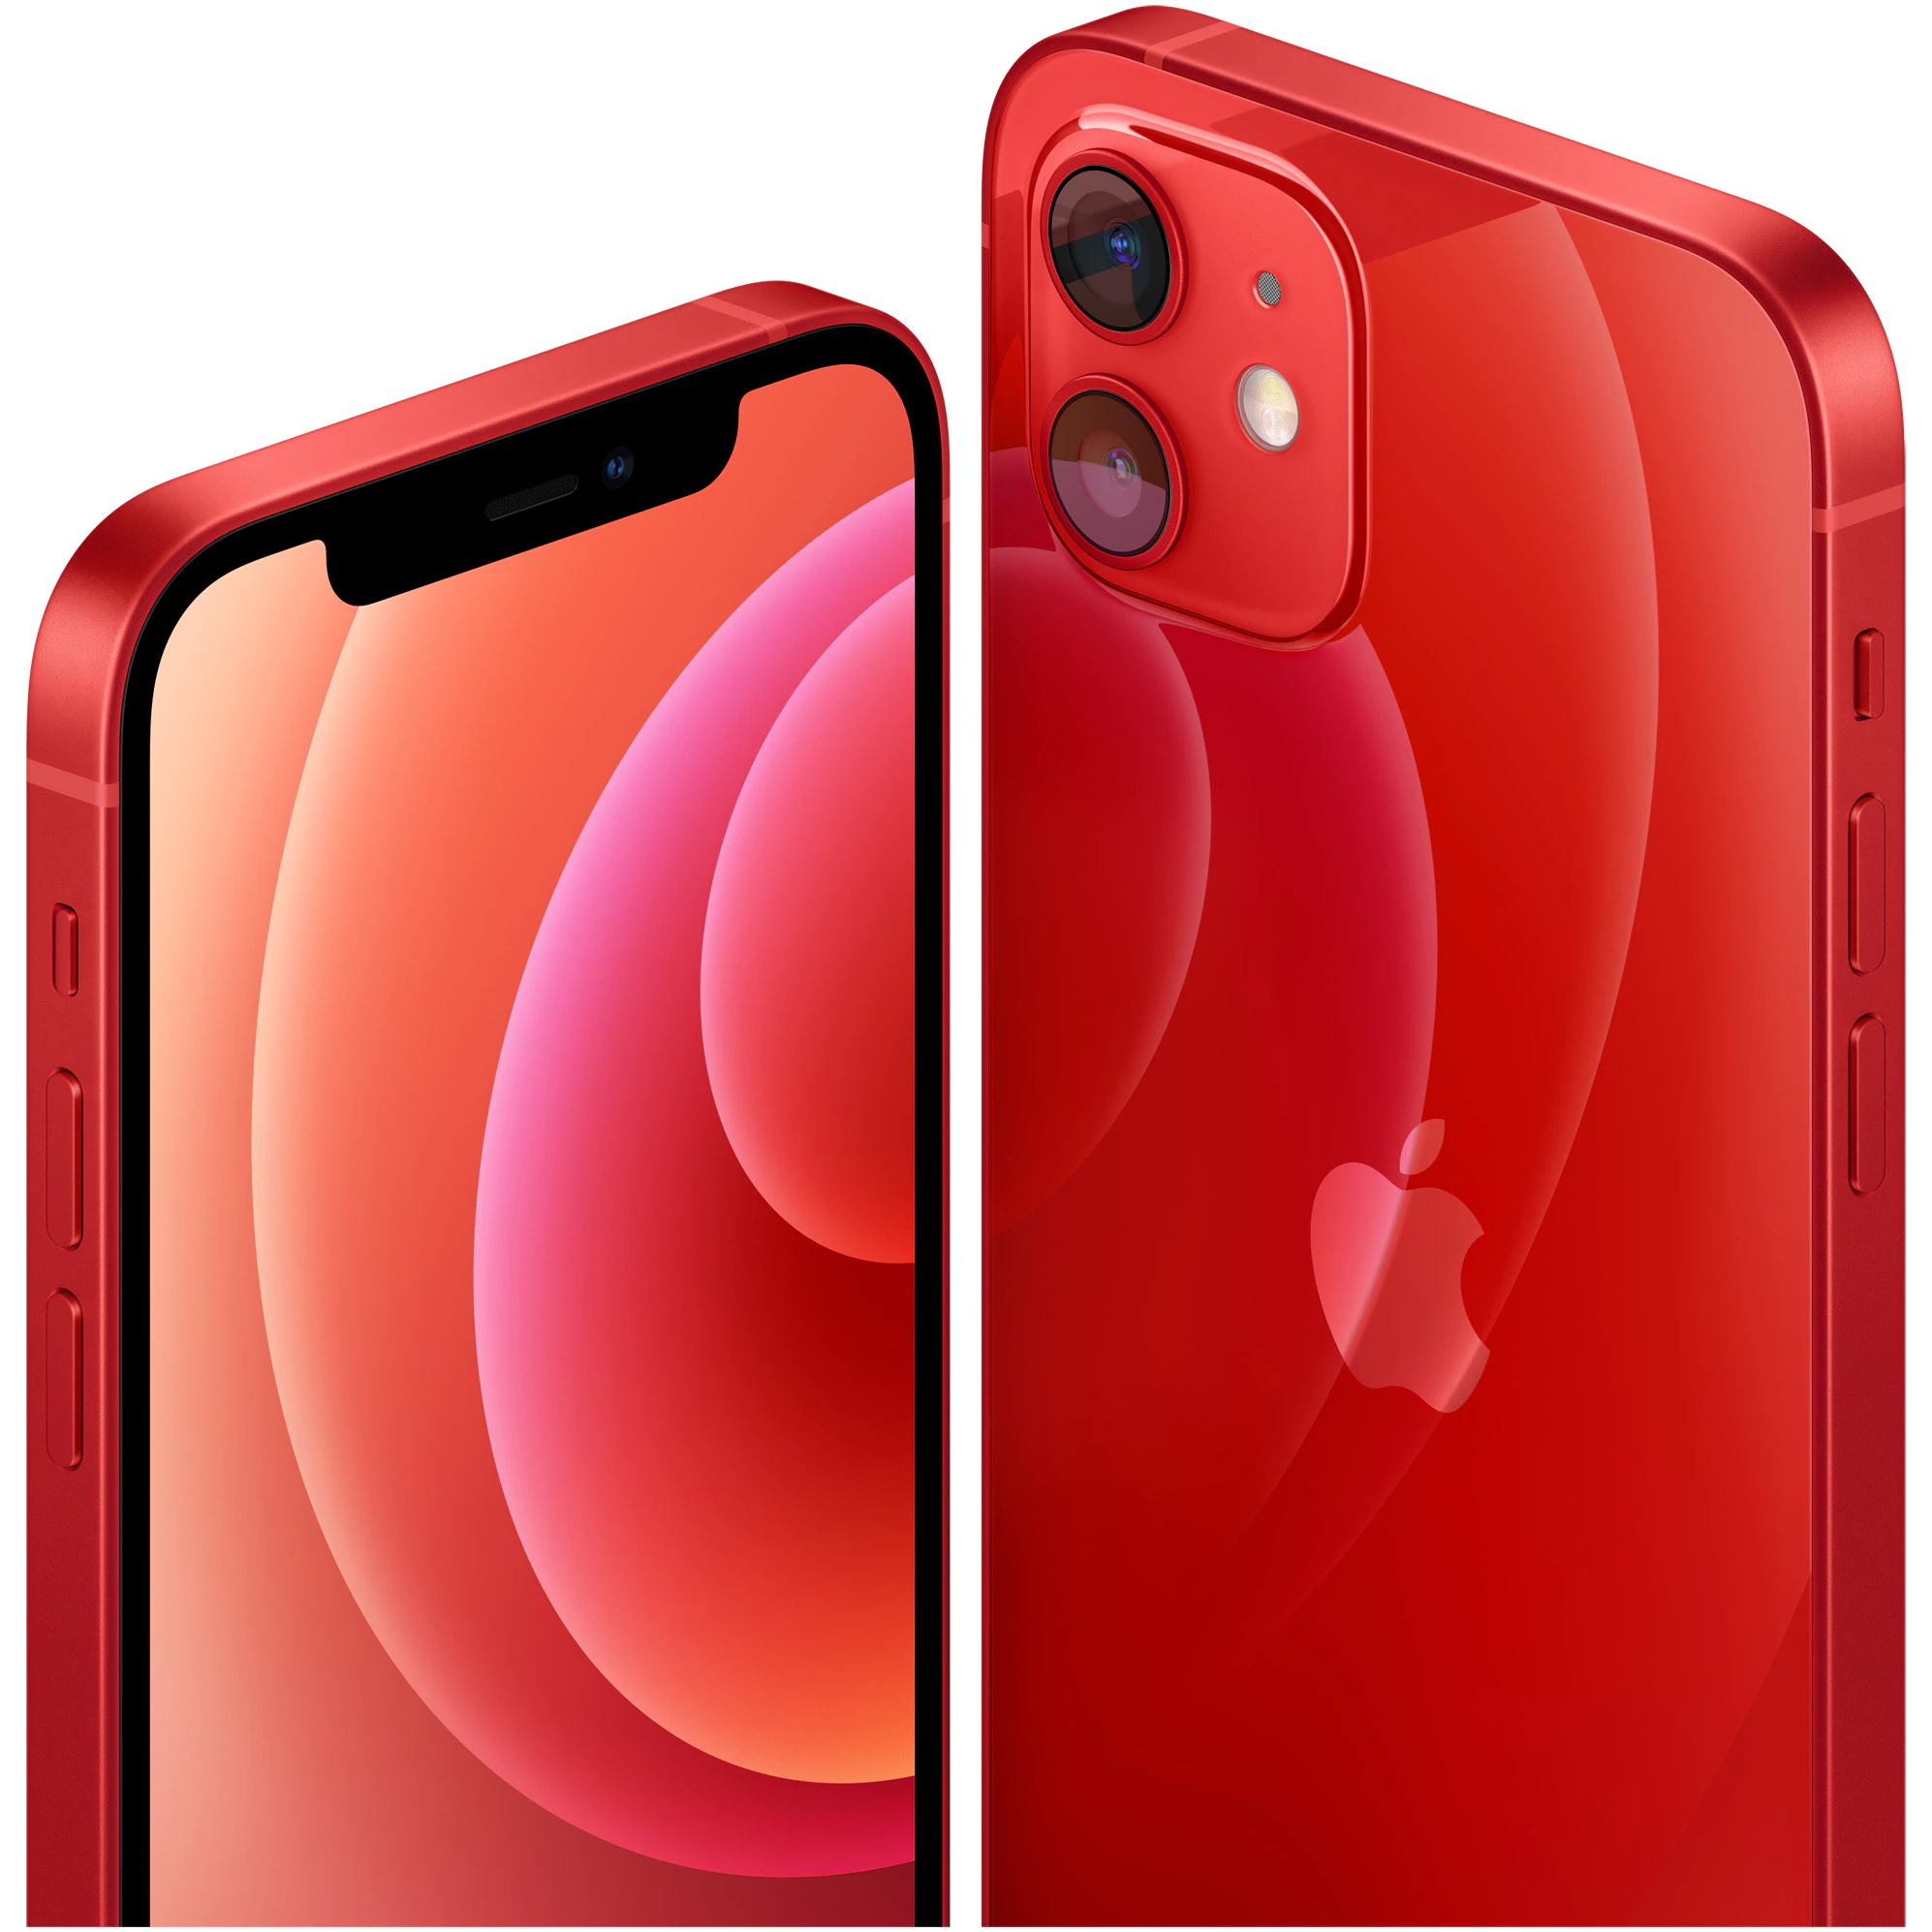 Telefon mobil Apple iPhone 12 Red, Rosu, 64GB, Dual eSim, Super retina XDR [0]